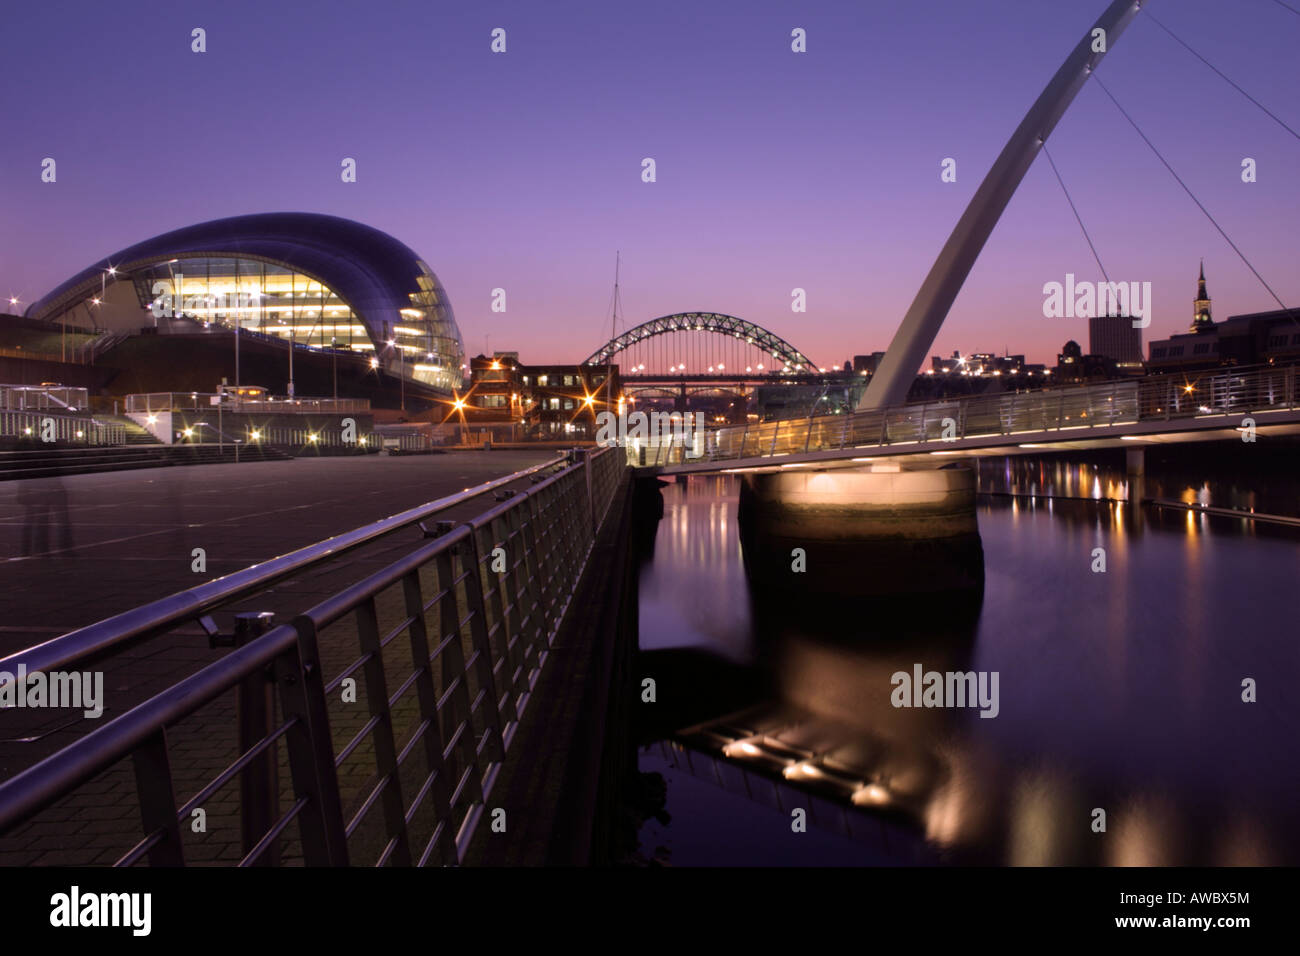 Newcastle Gateshead Quayside showing Millennium Bridge, Gateshead Sage and Tyne Bridge at Dusk, taken from Baltic Art Gallery Stock Photo